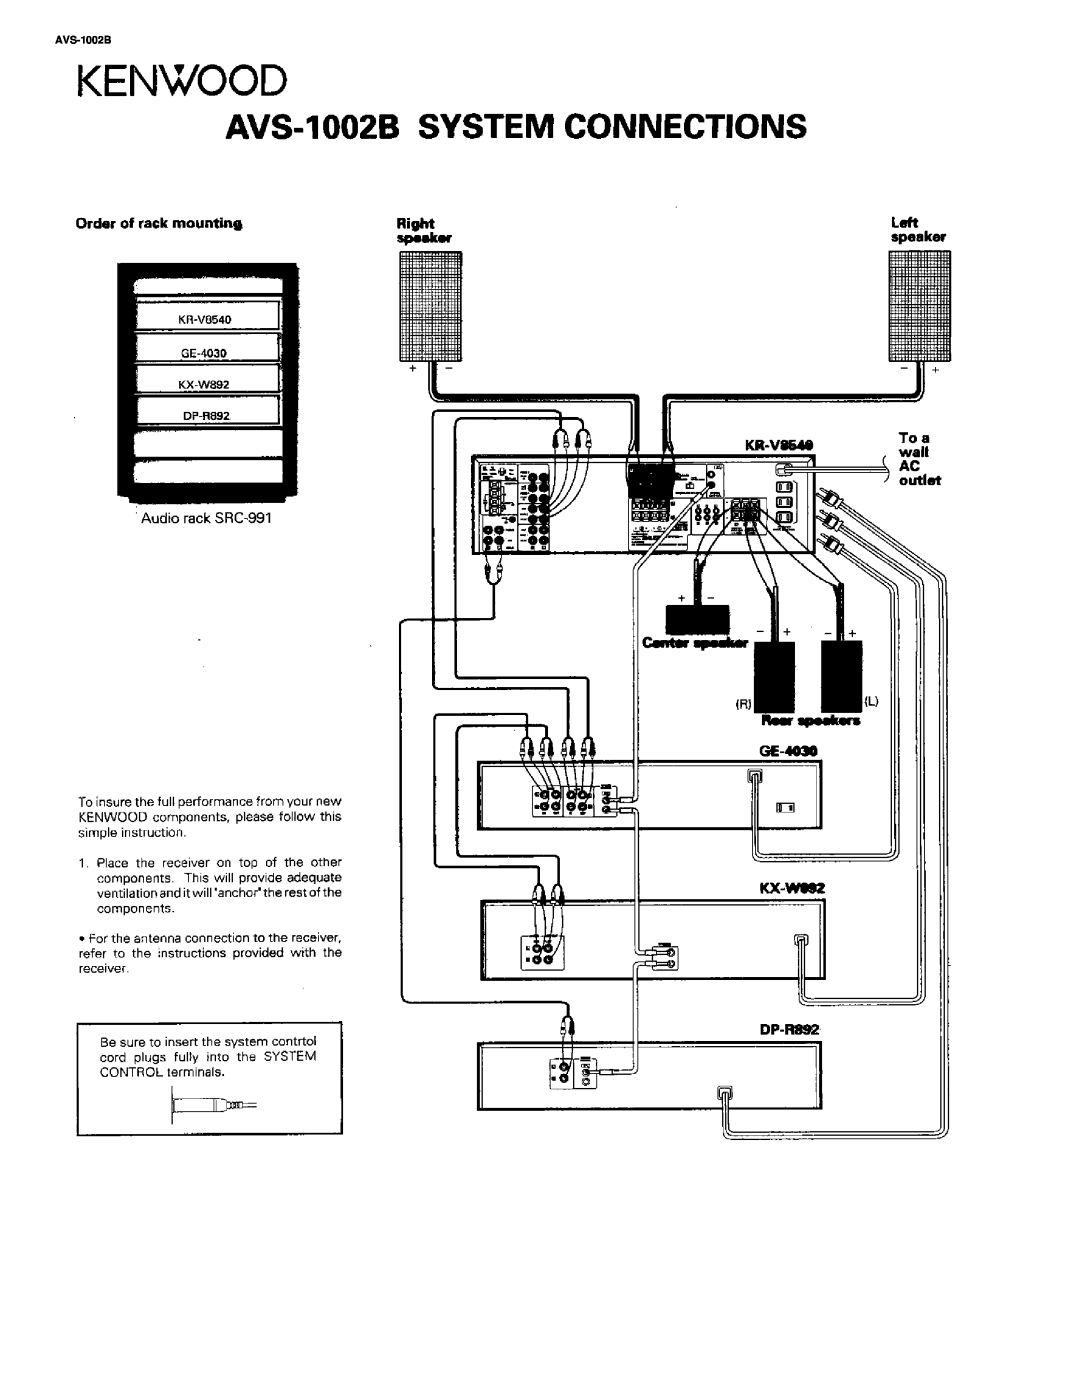 Kenwood AVS-1002B manual 